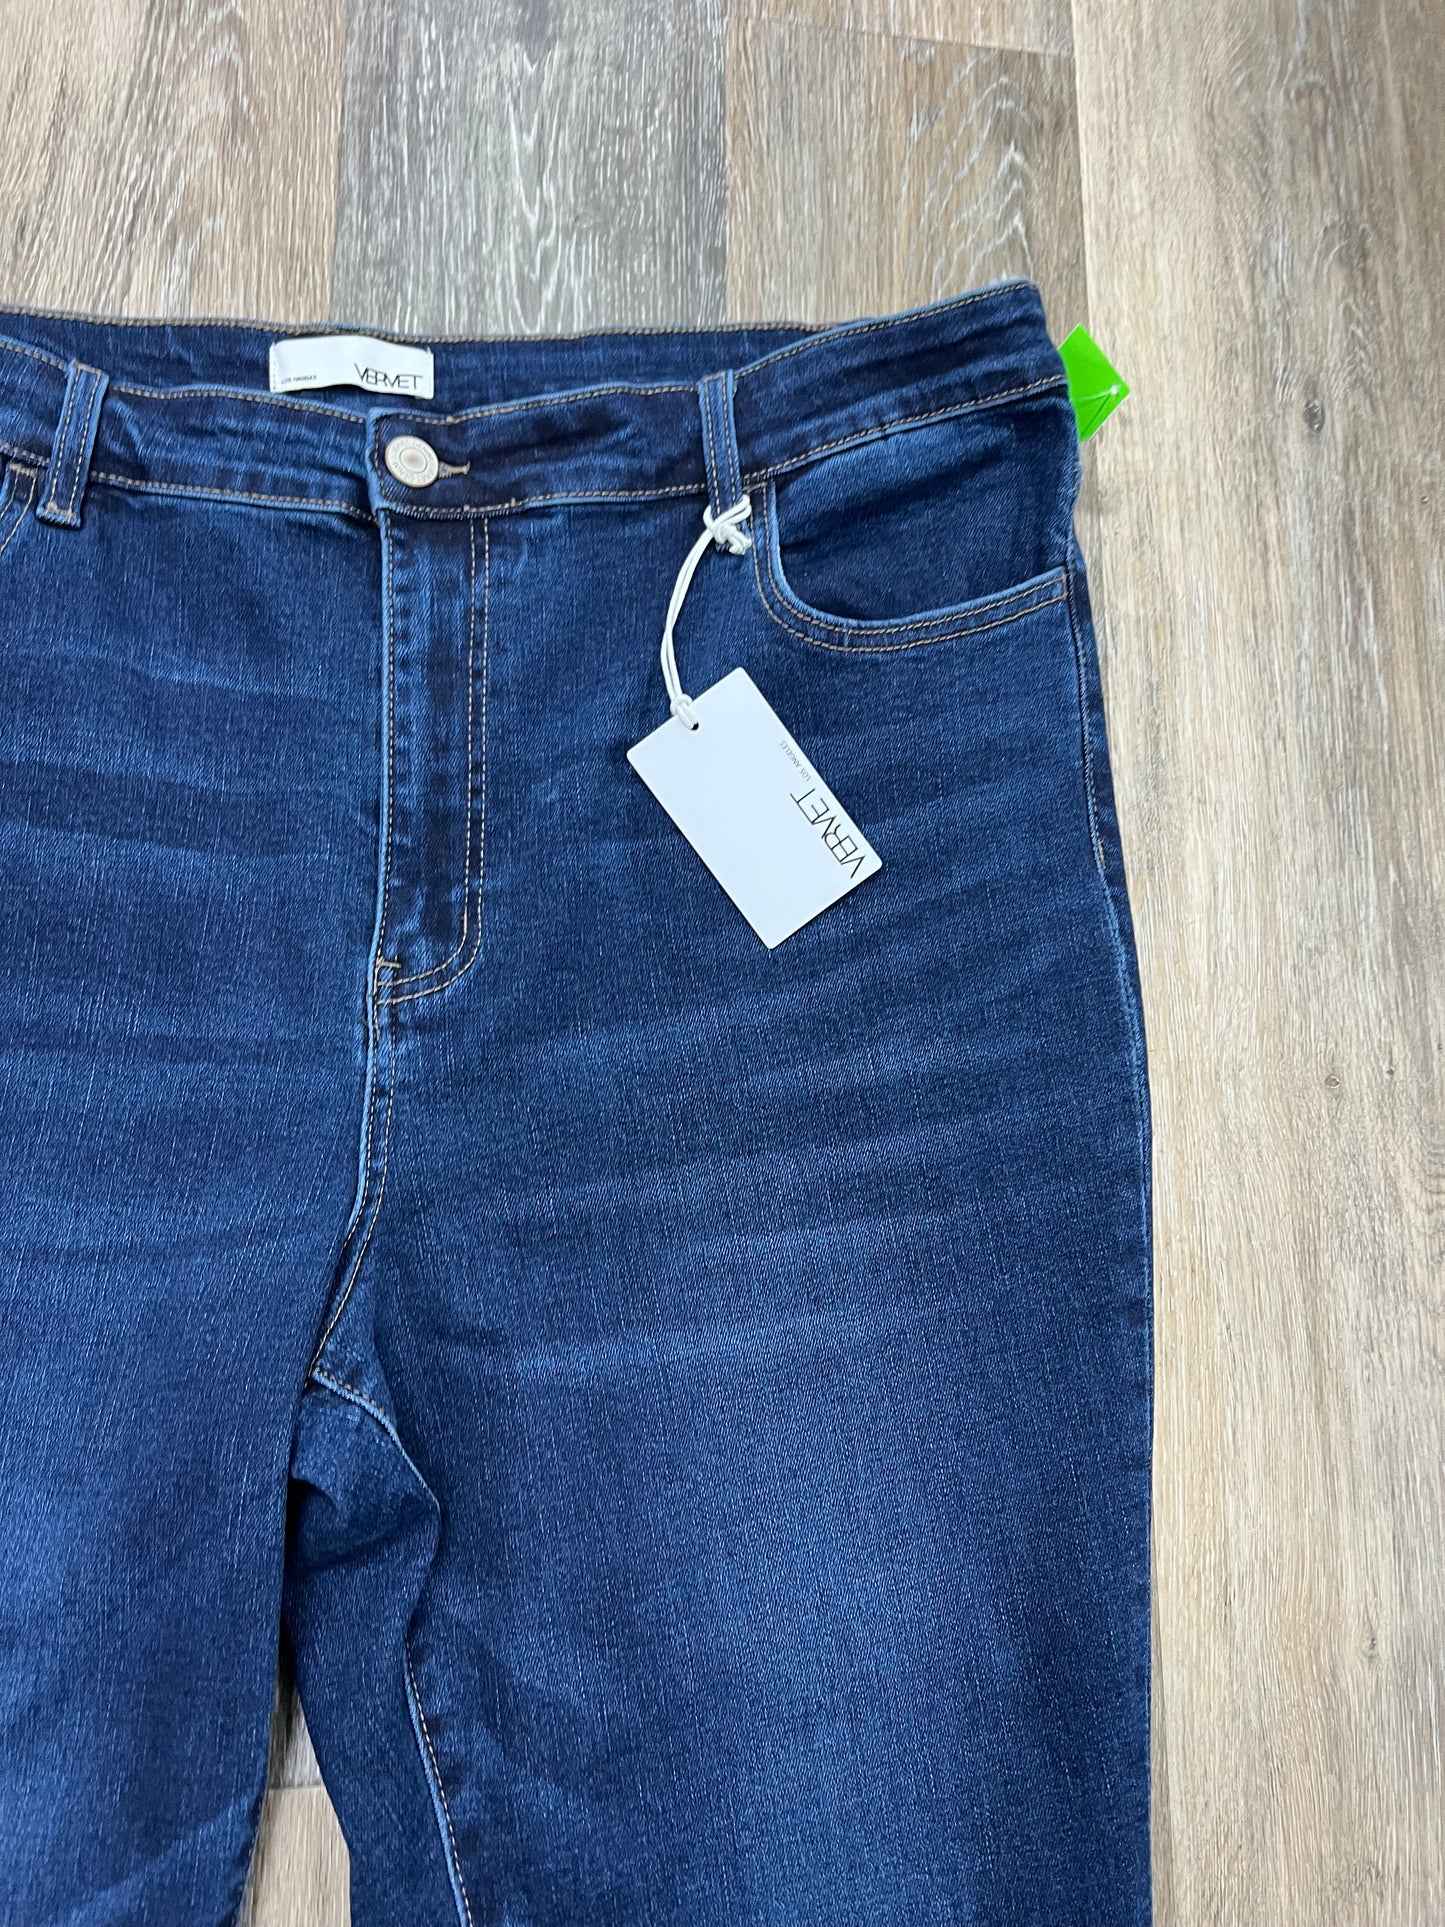 Jeans Skinny By Vervet  Size: 22